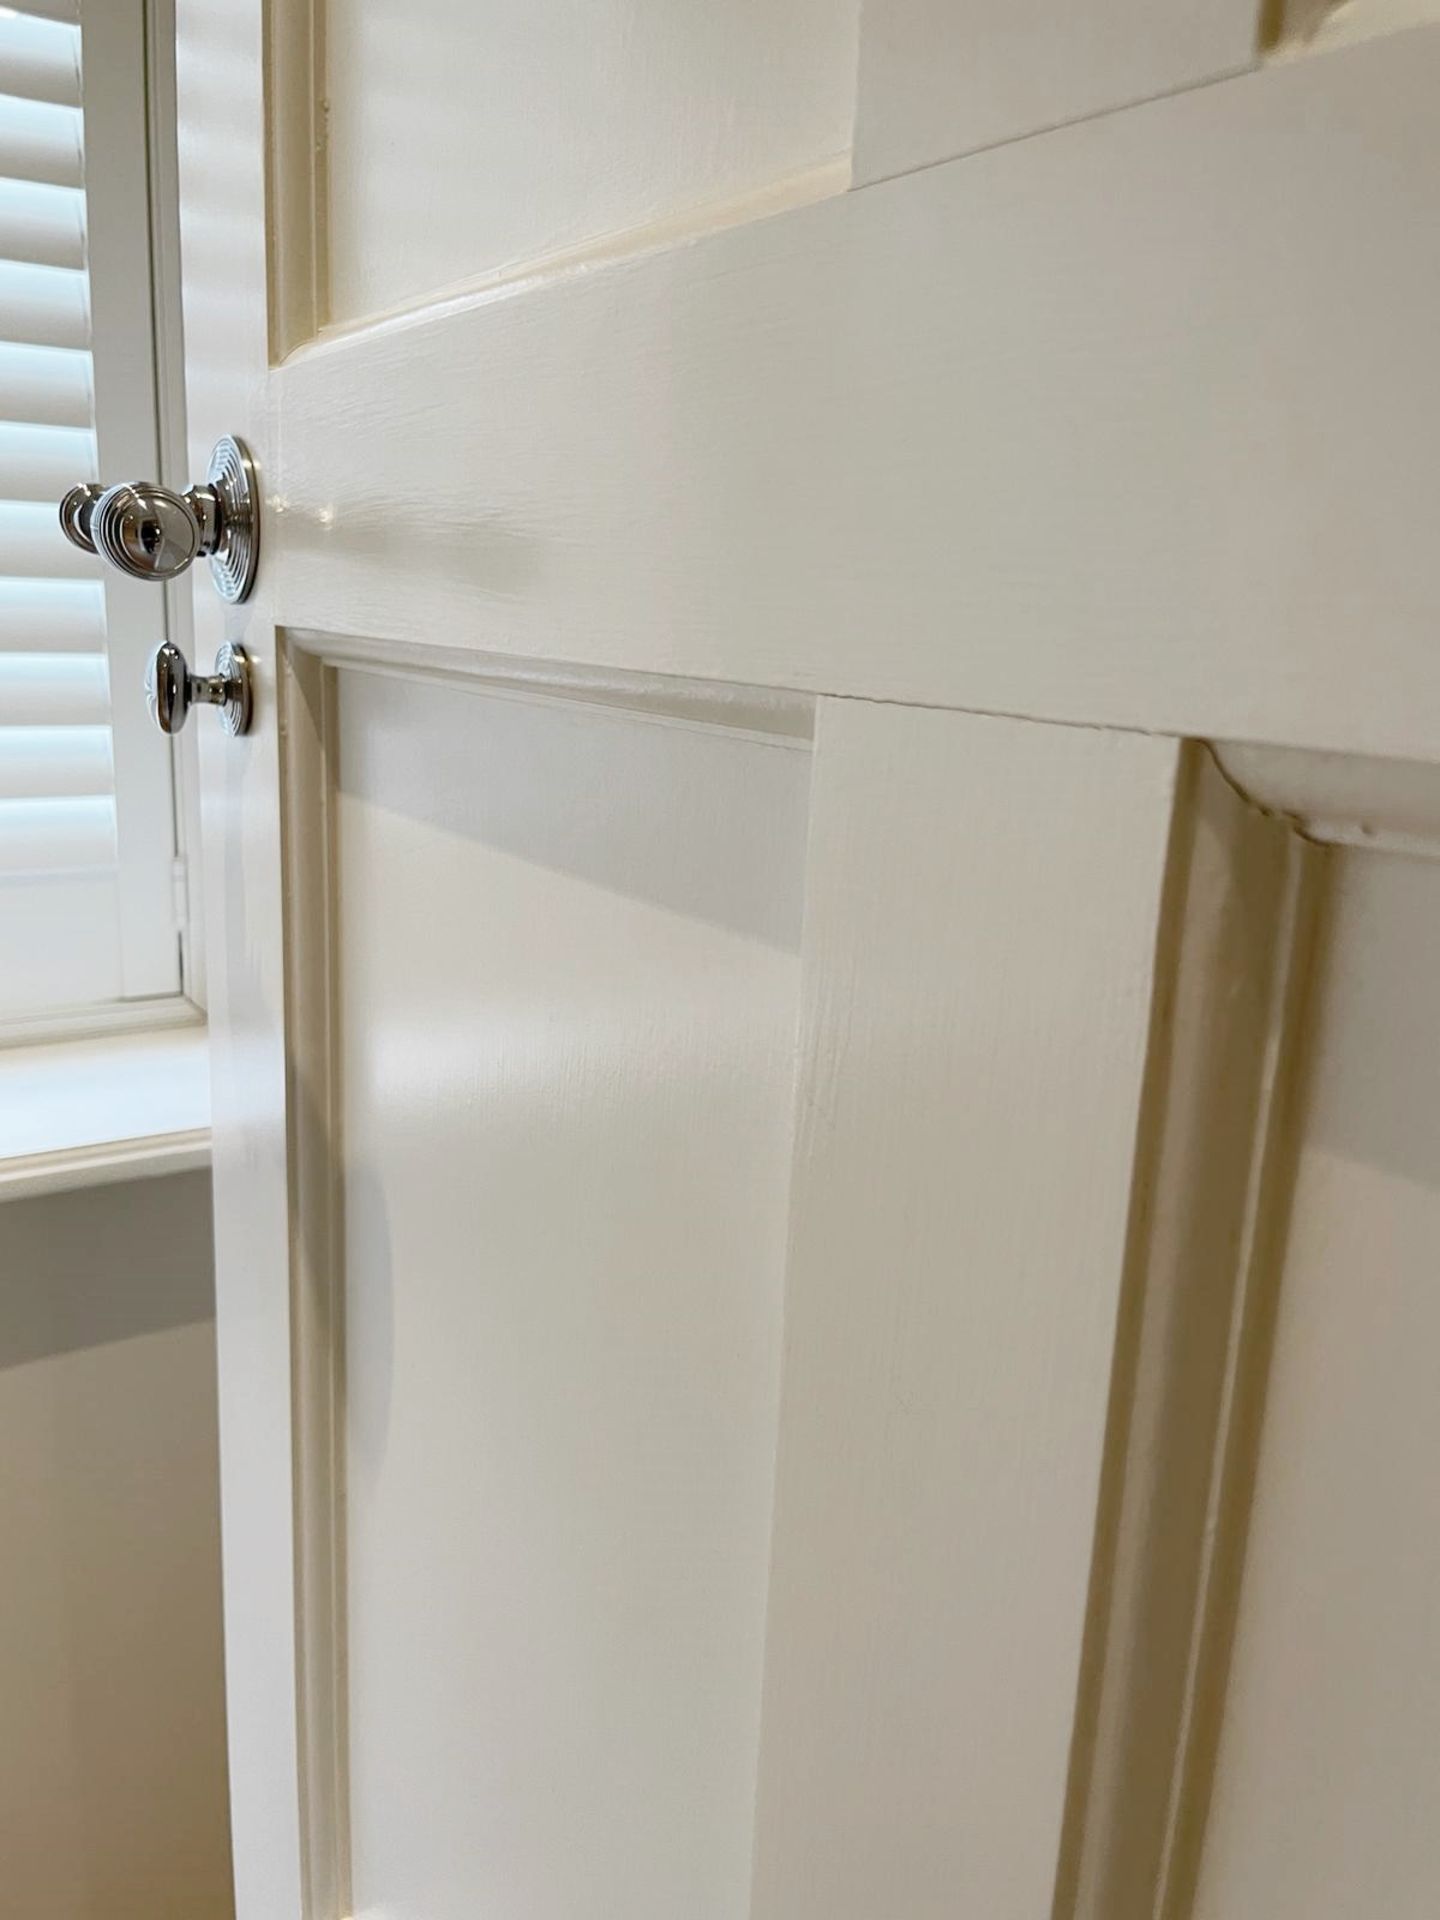 1 x Solid Wood Lockable Internal Bathroom Door Painted White - Includes Hinges and Handles - Ref: - Image 3 of 8